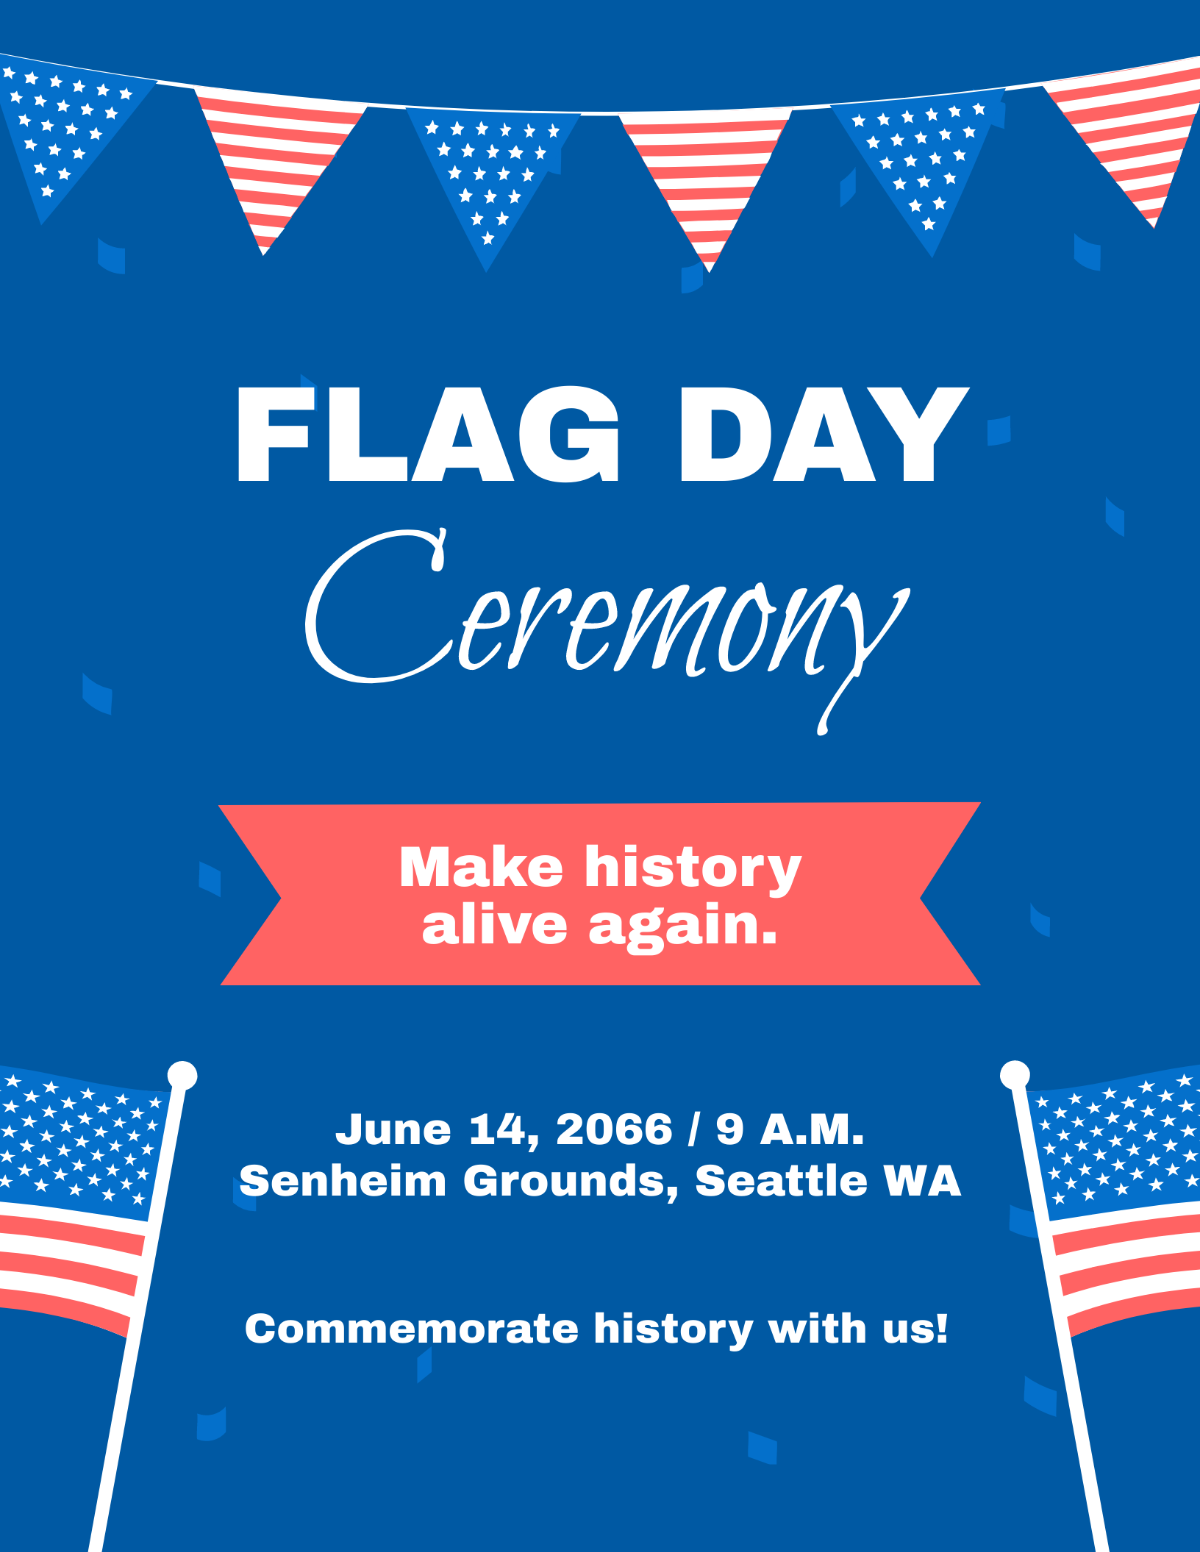 Flag Day Ceremony Flyer